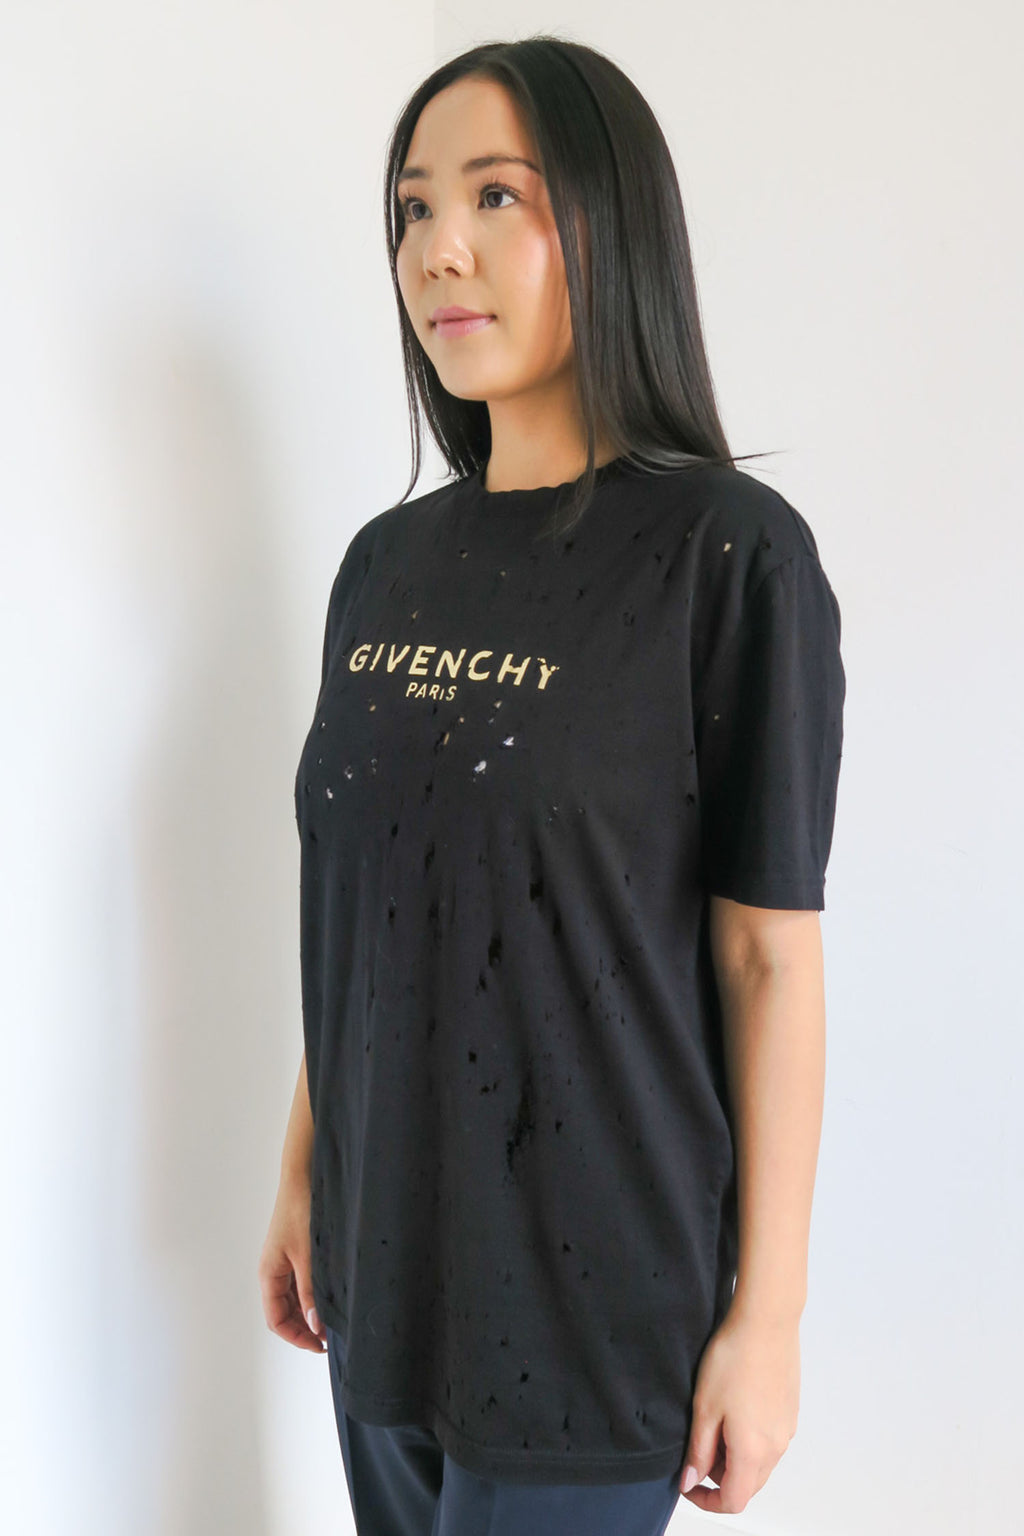 Givenchy Graphic Print Crew T-Shirt sz M